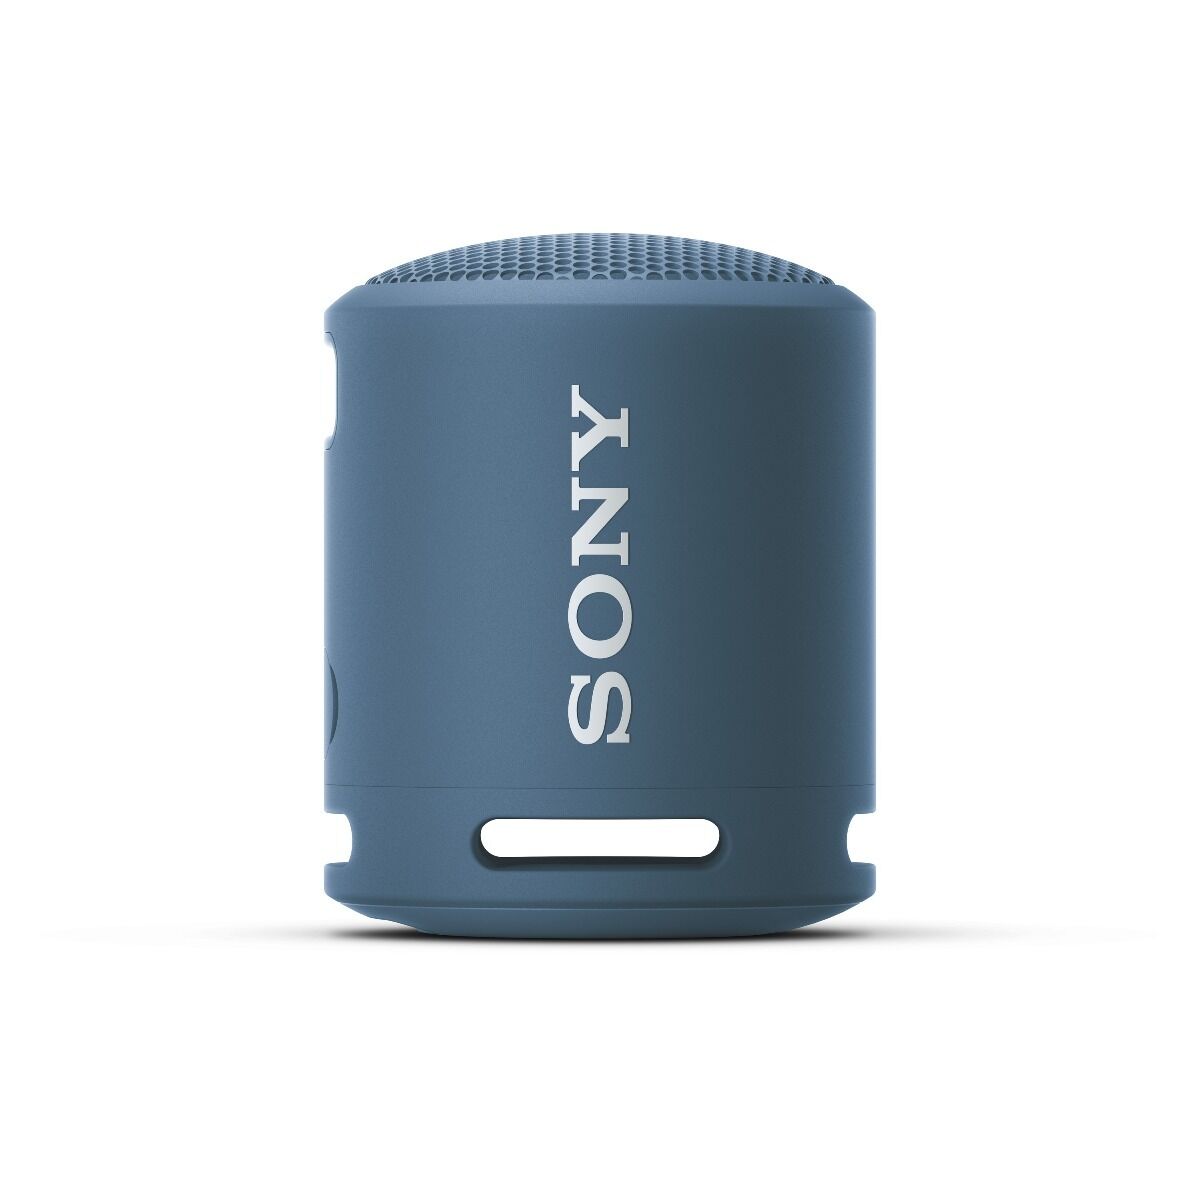 Boxa portabila compacta SONY SRS-XB13, Extra Bass, Bluetooth cu Fast-Pair, Hands-Free, Wireless, Clasificare IP67, Autonomie 16 ore, USB Type-C, Albastru